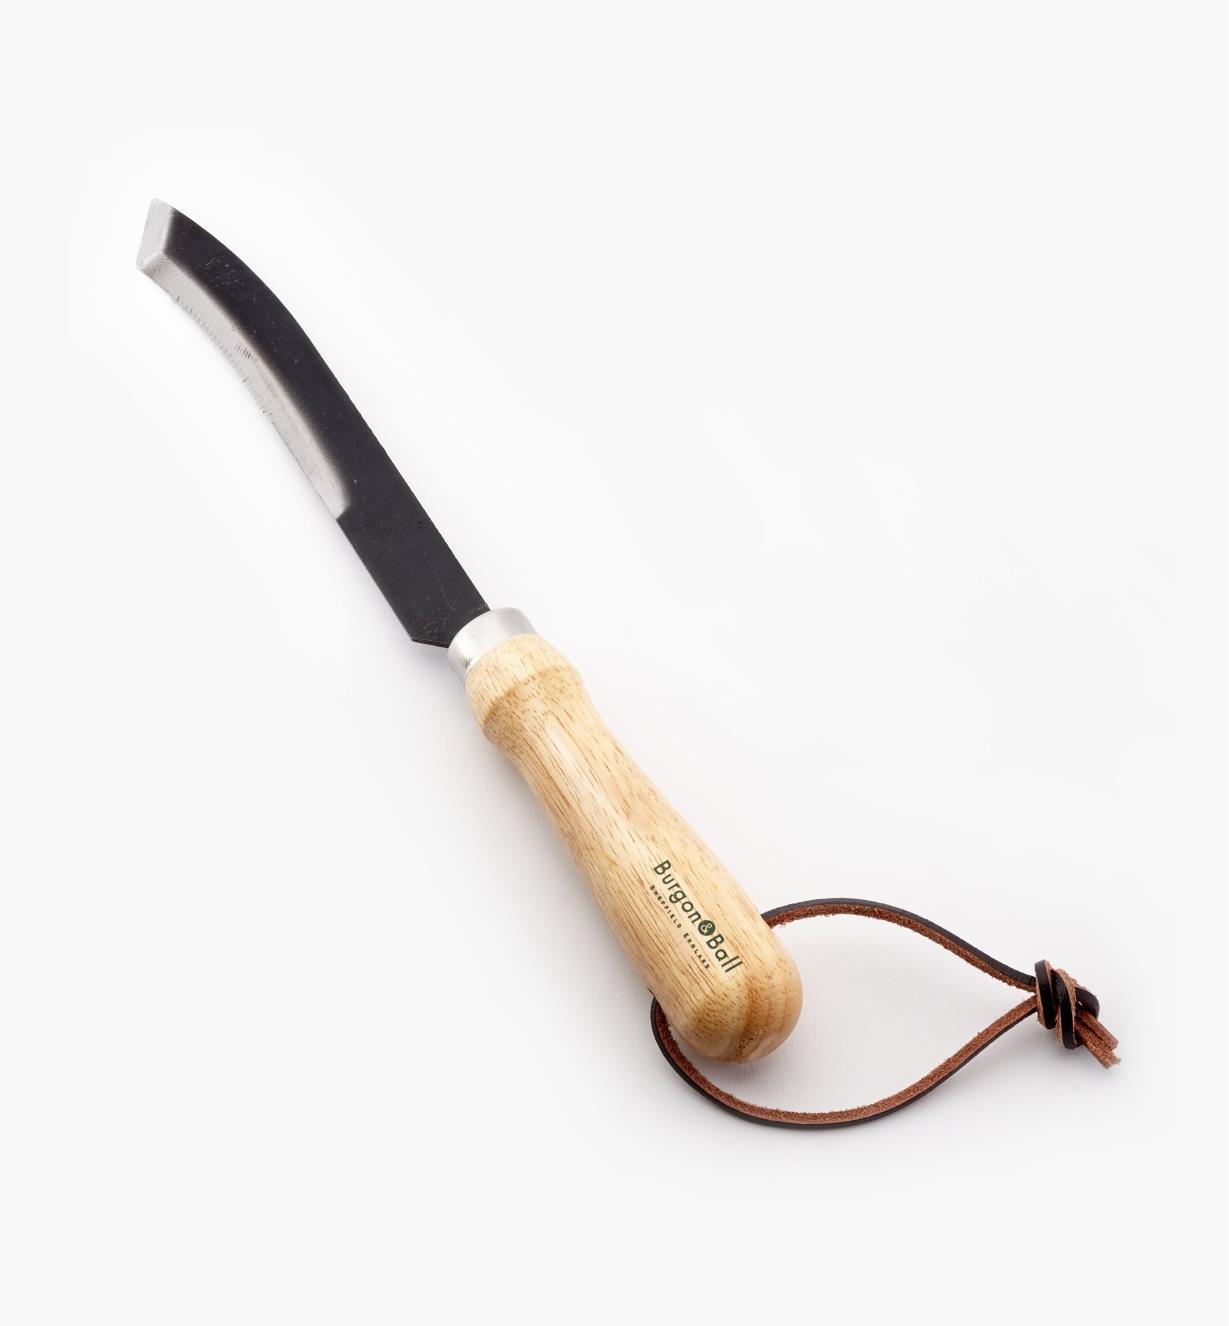 BL114 - Asparagus/Harvest Knife